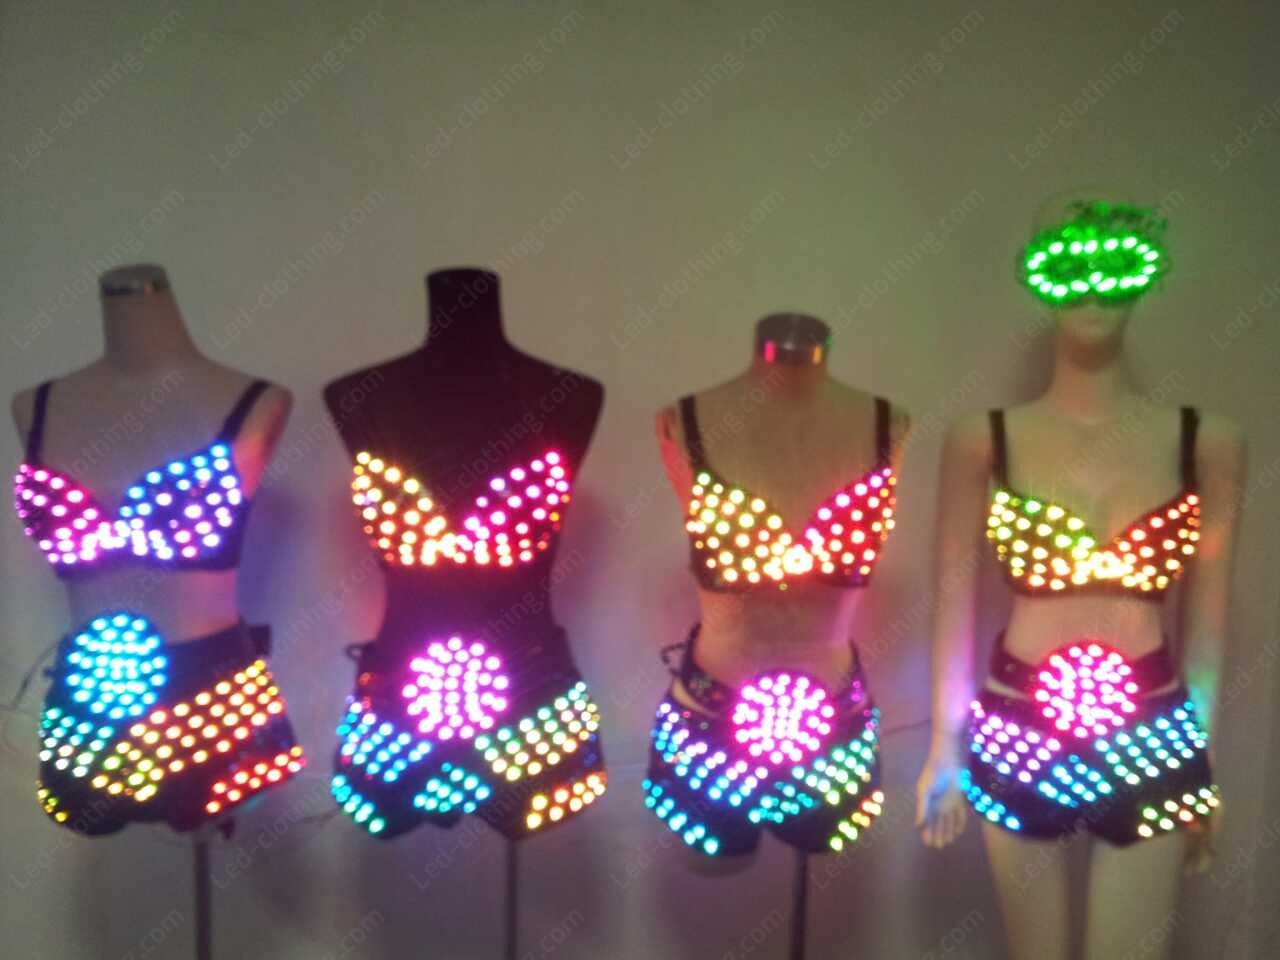 15 LED light up bras ideas